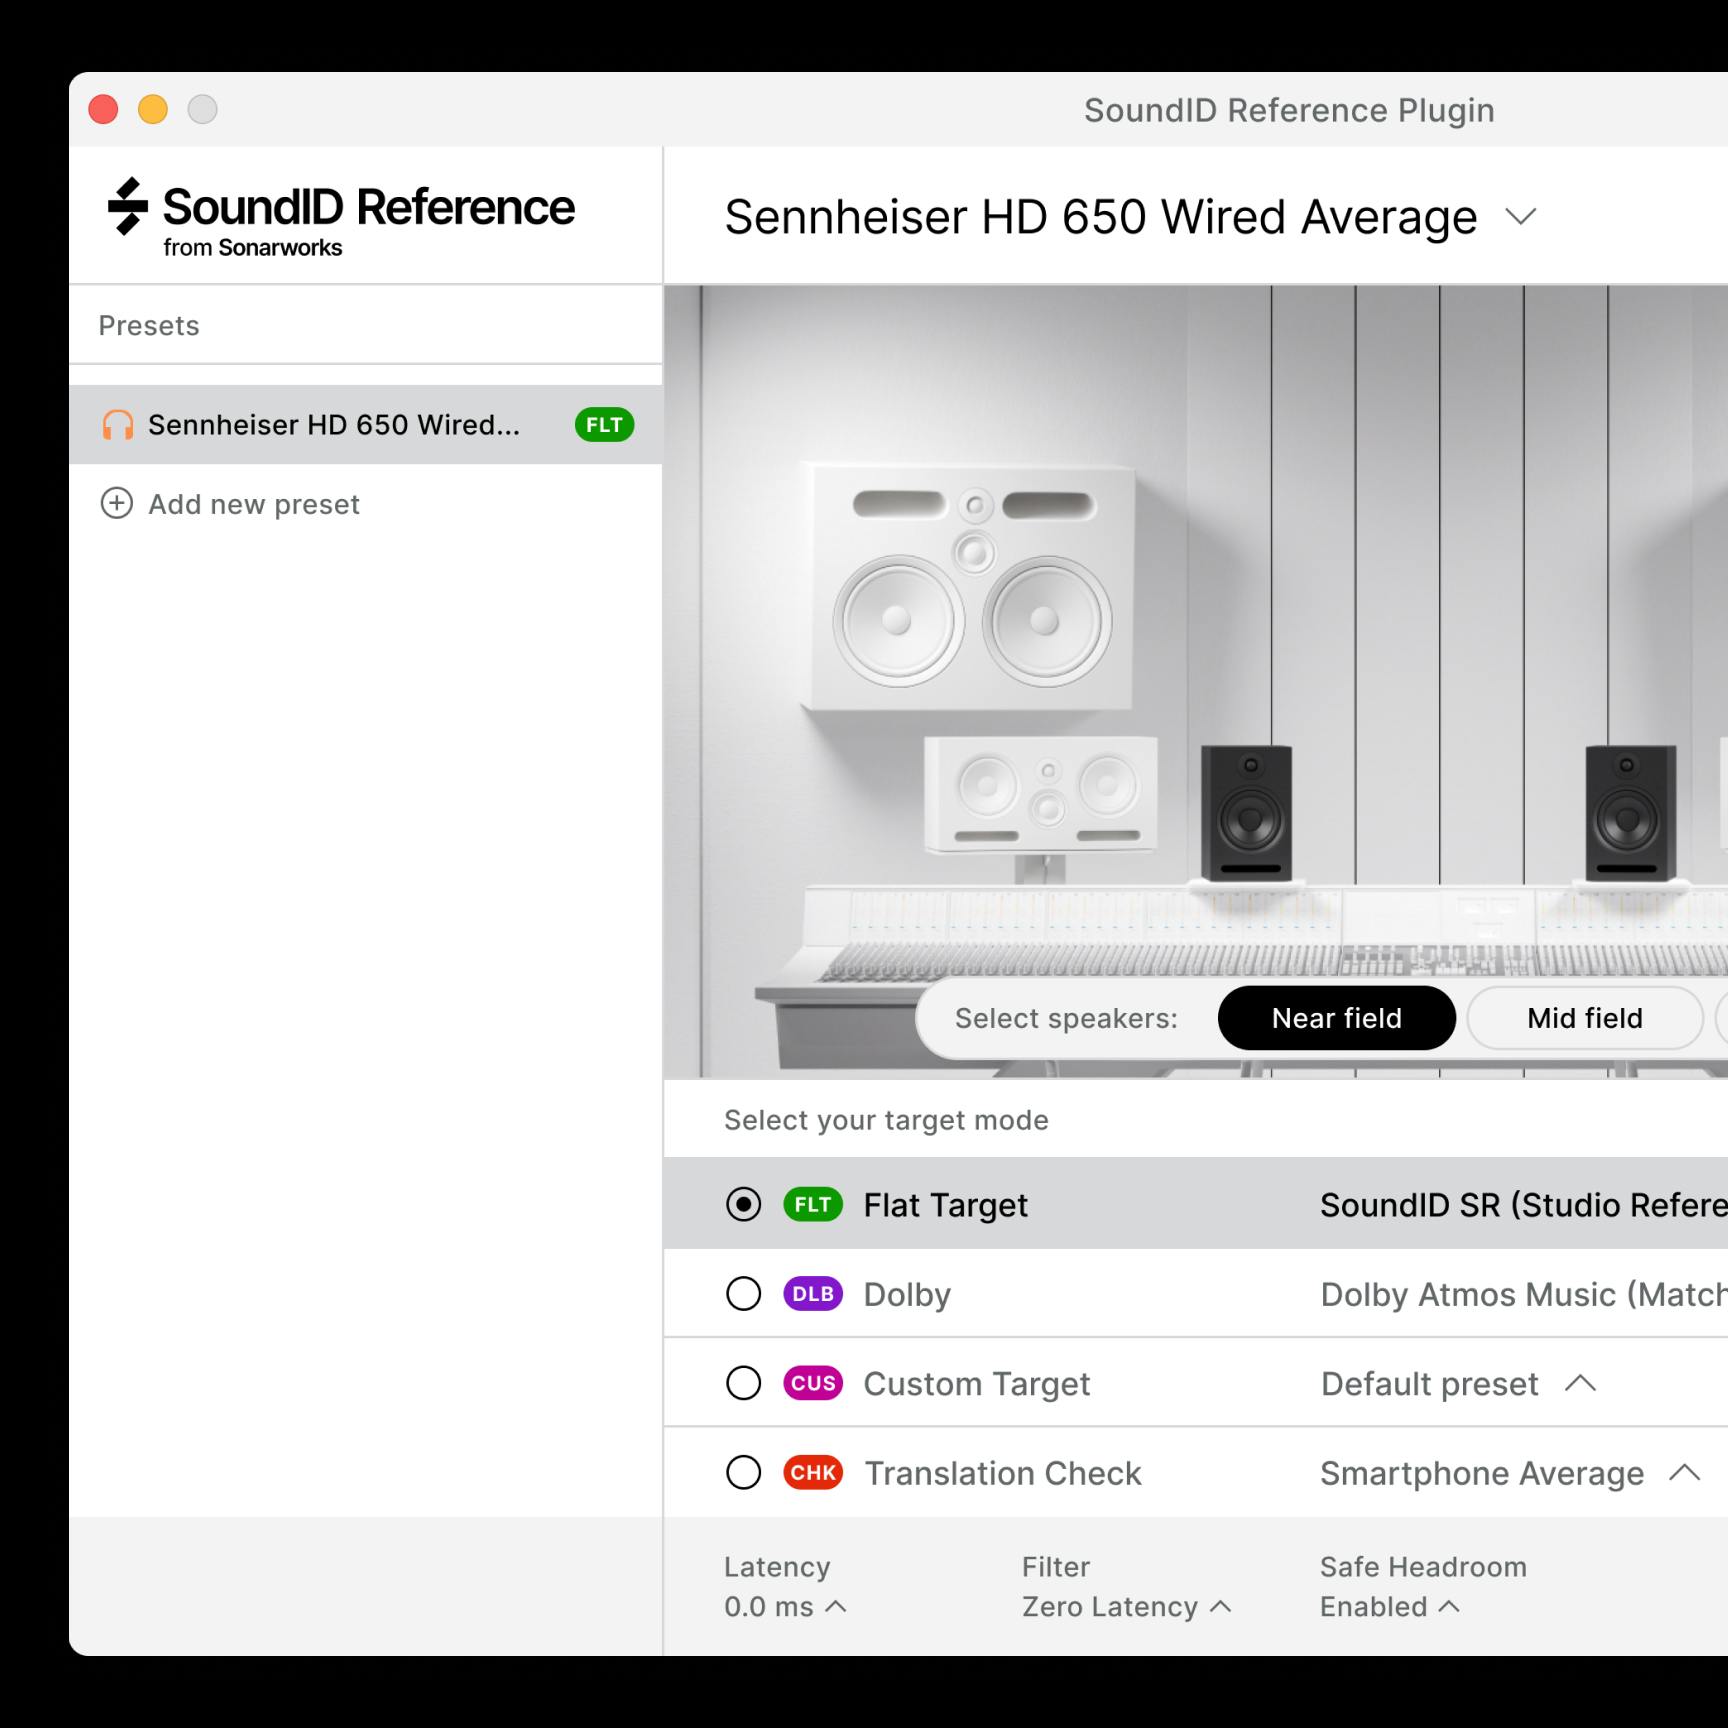 SoundID Reference Virtual Monitoring Add-on